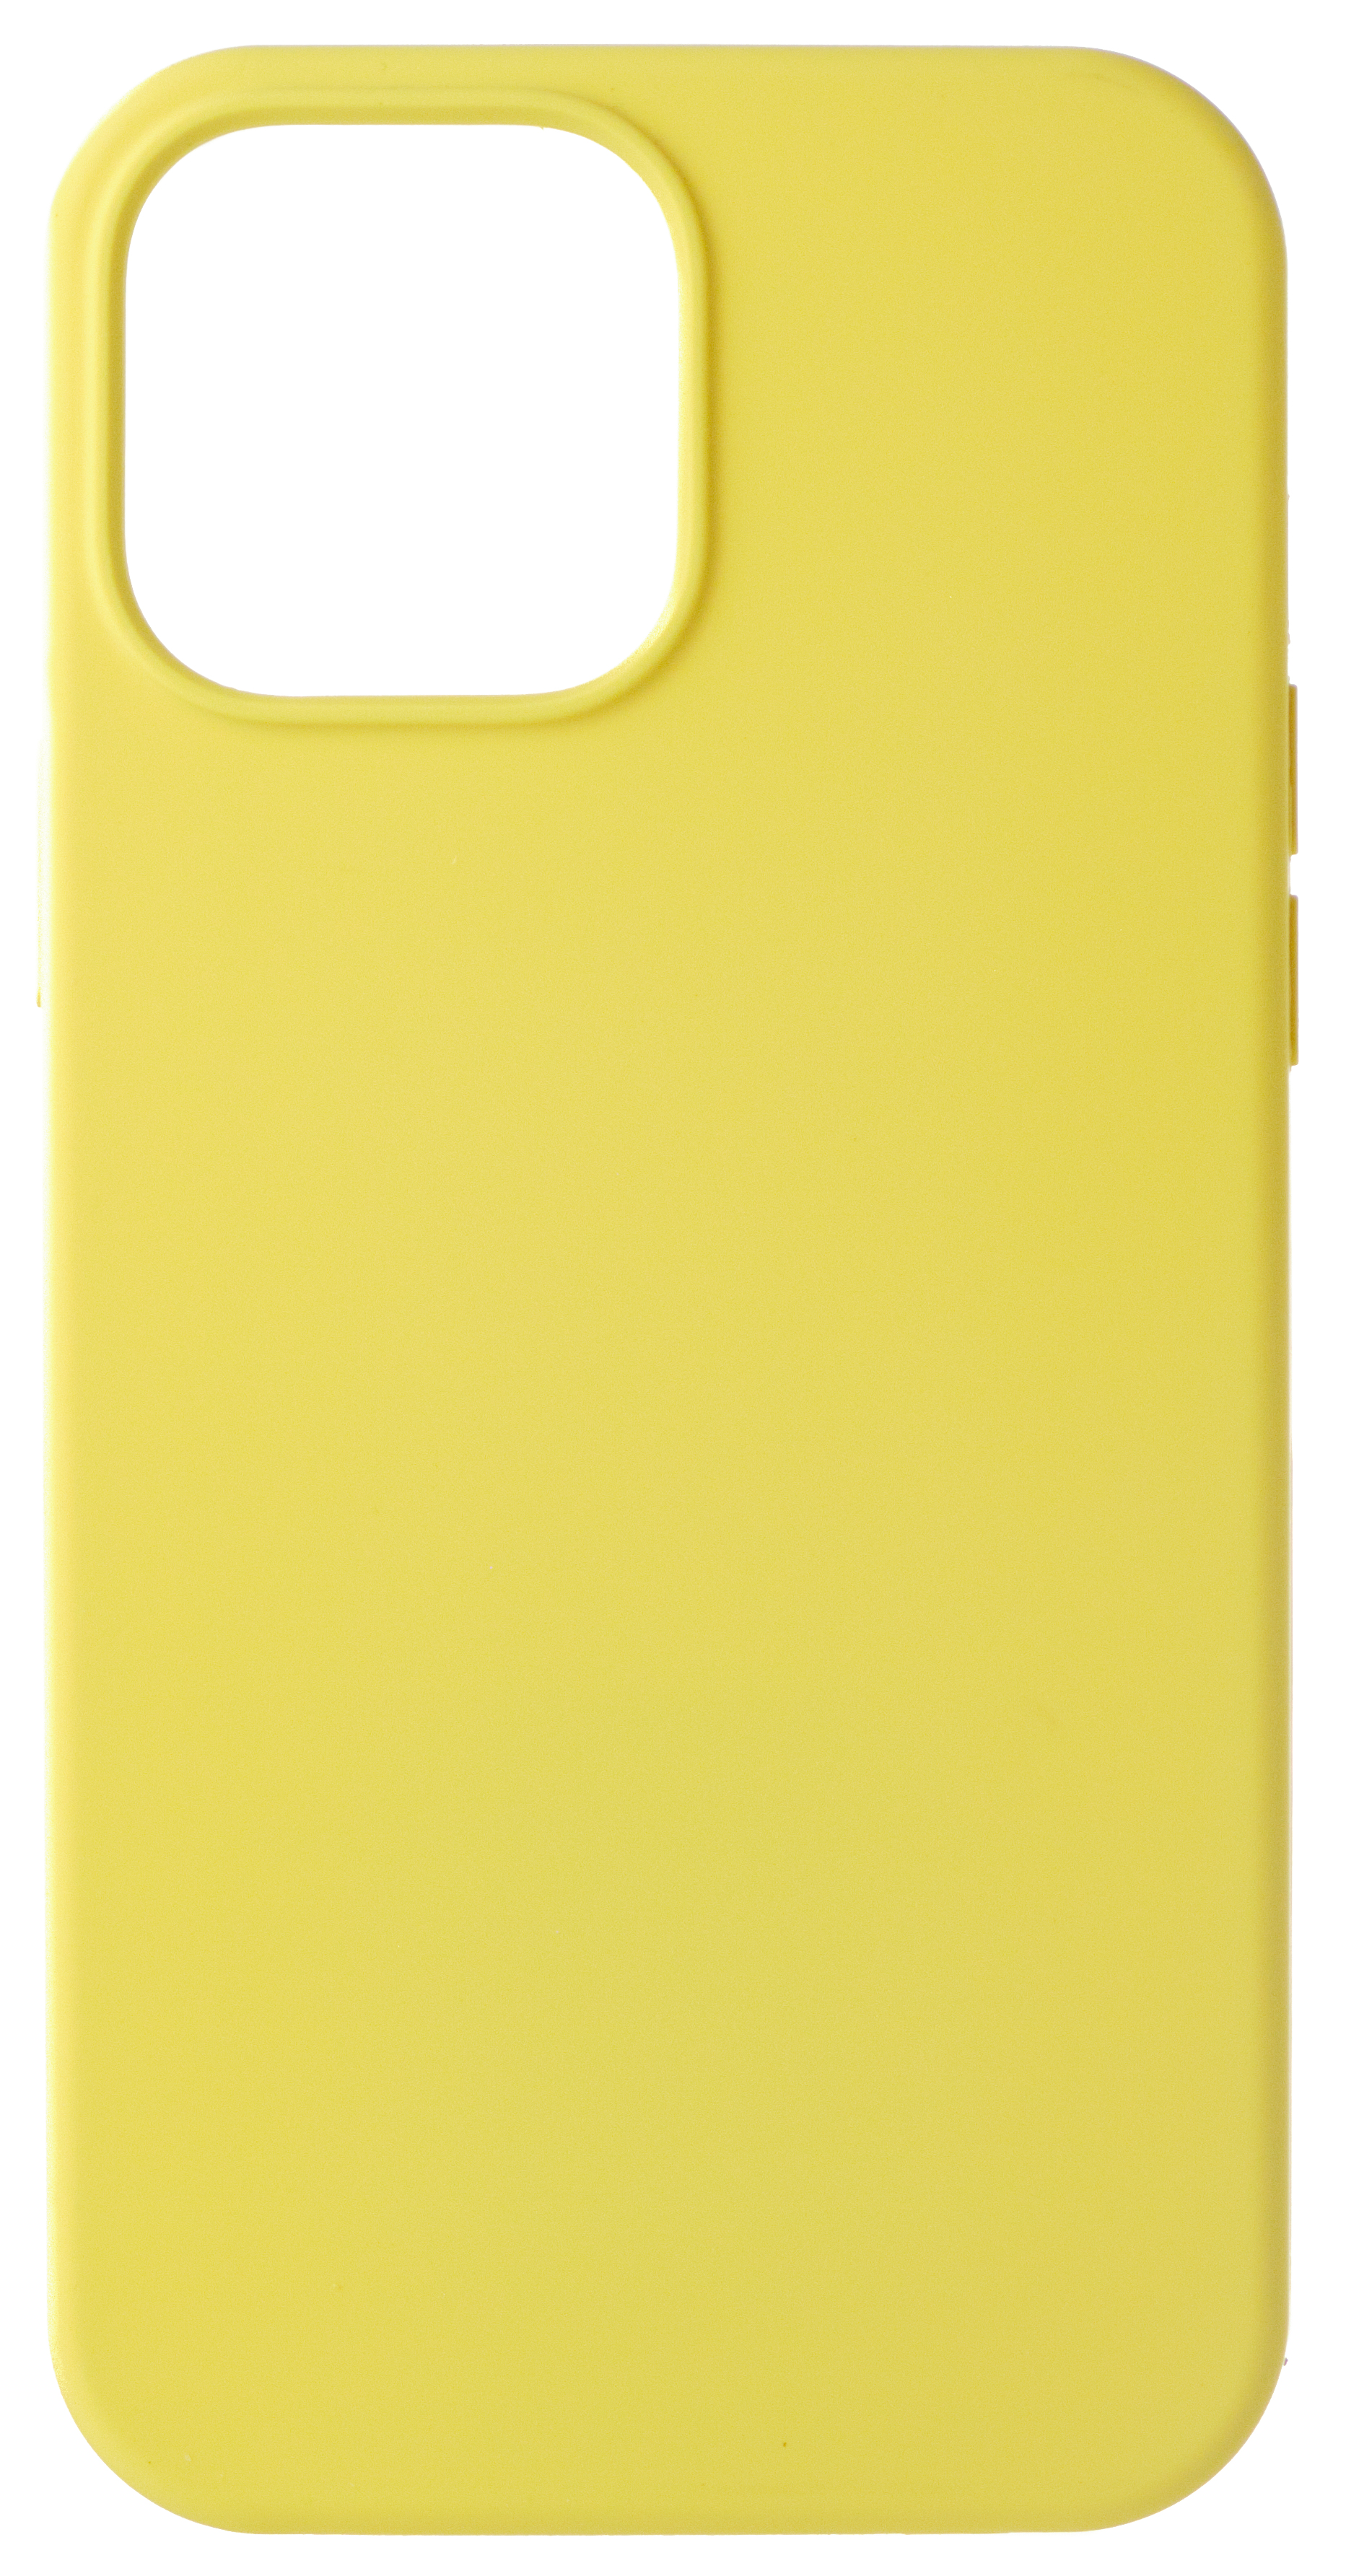 Чехол Silicone Case для iPhone 13 Pro Max без лого желтый